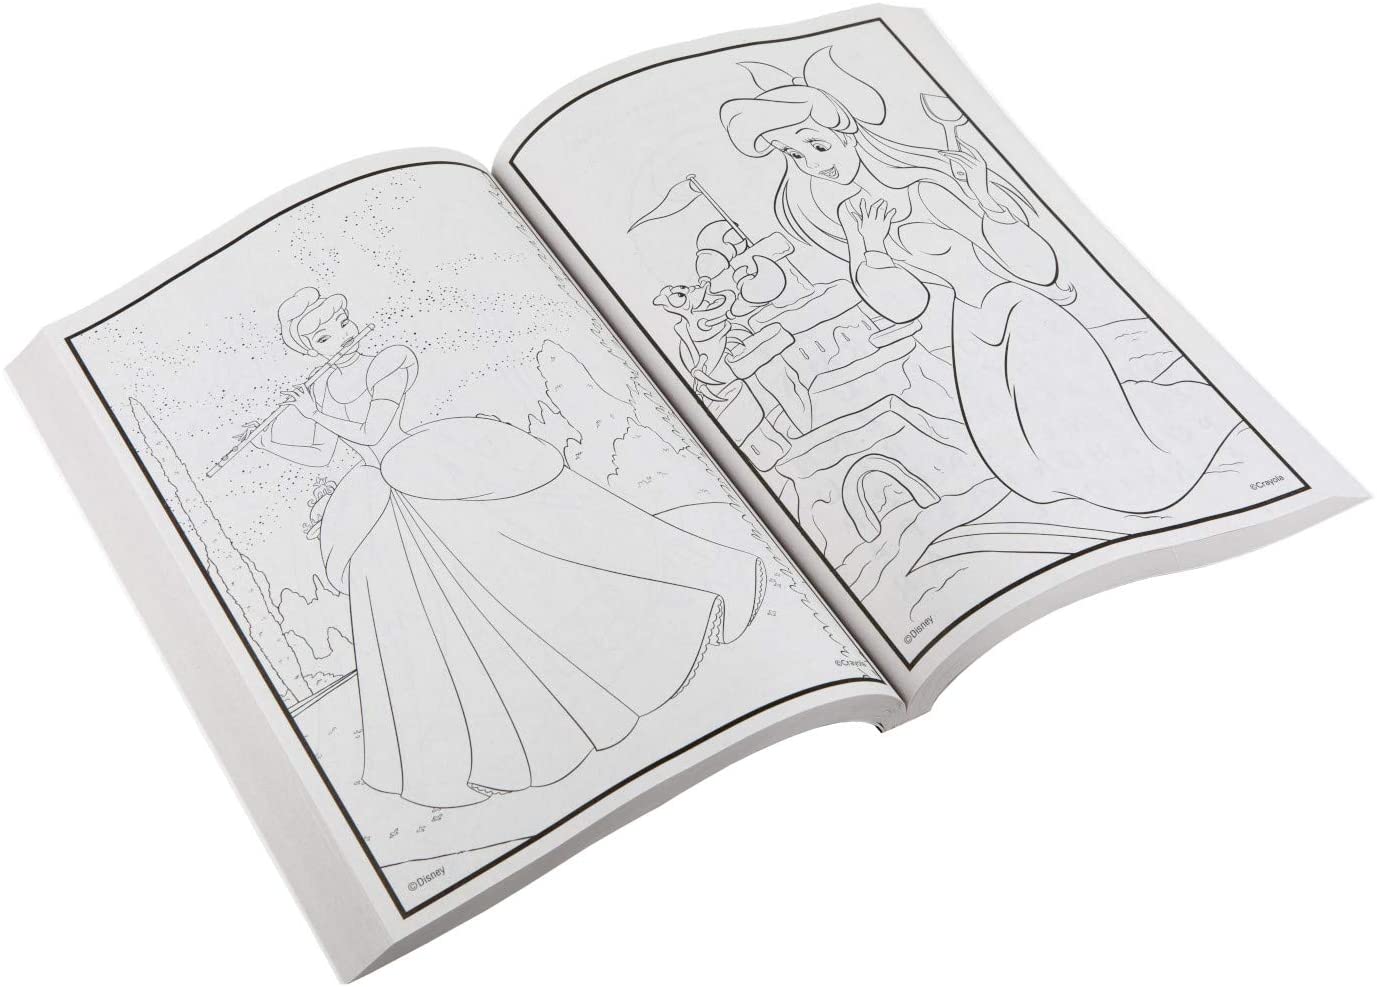 03) Crayola Disney Princess Coloring Book with Stickers close up